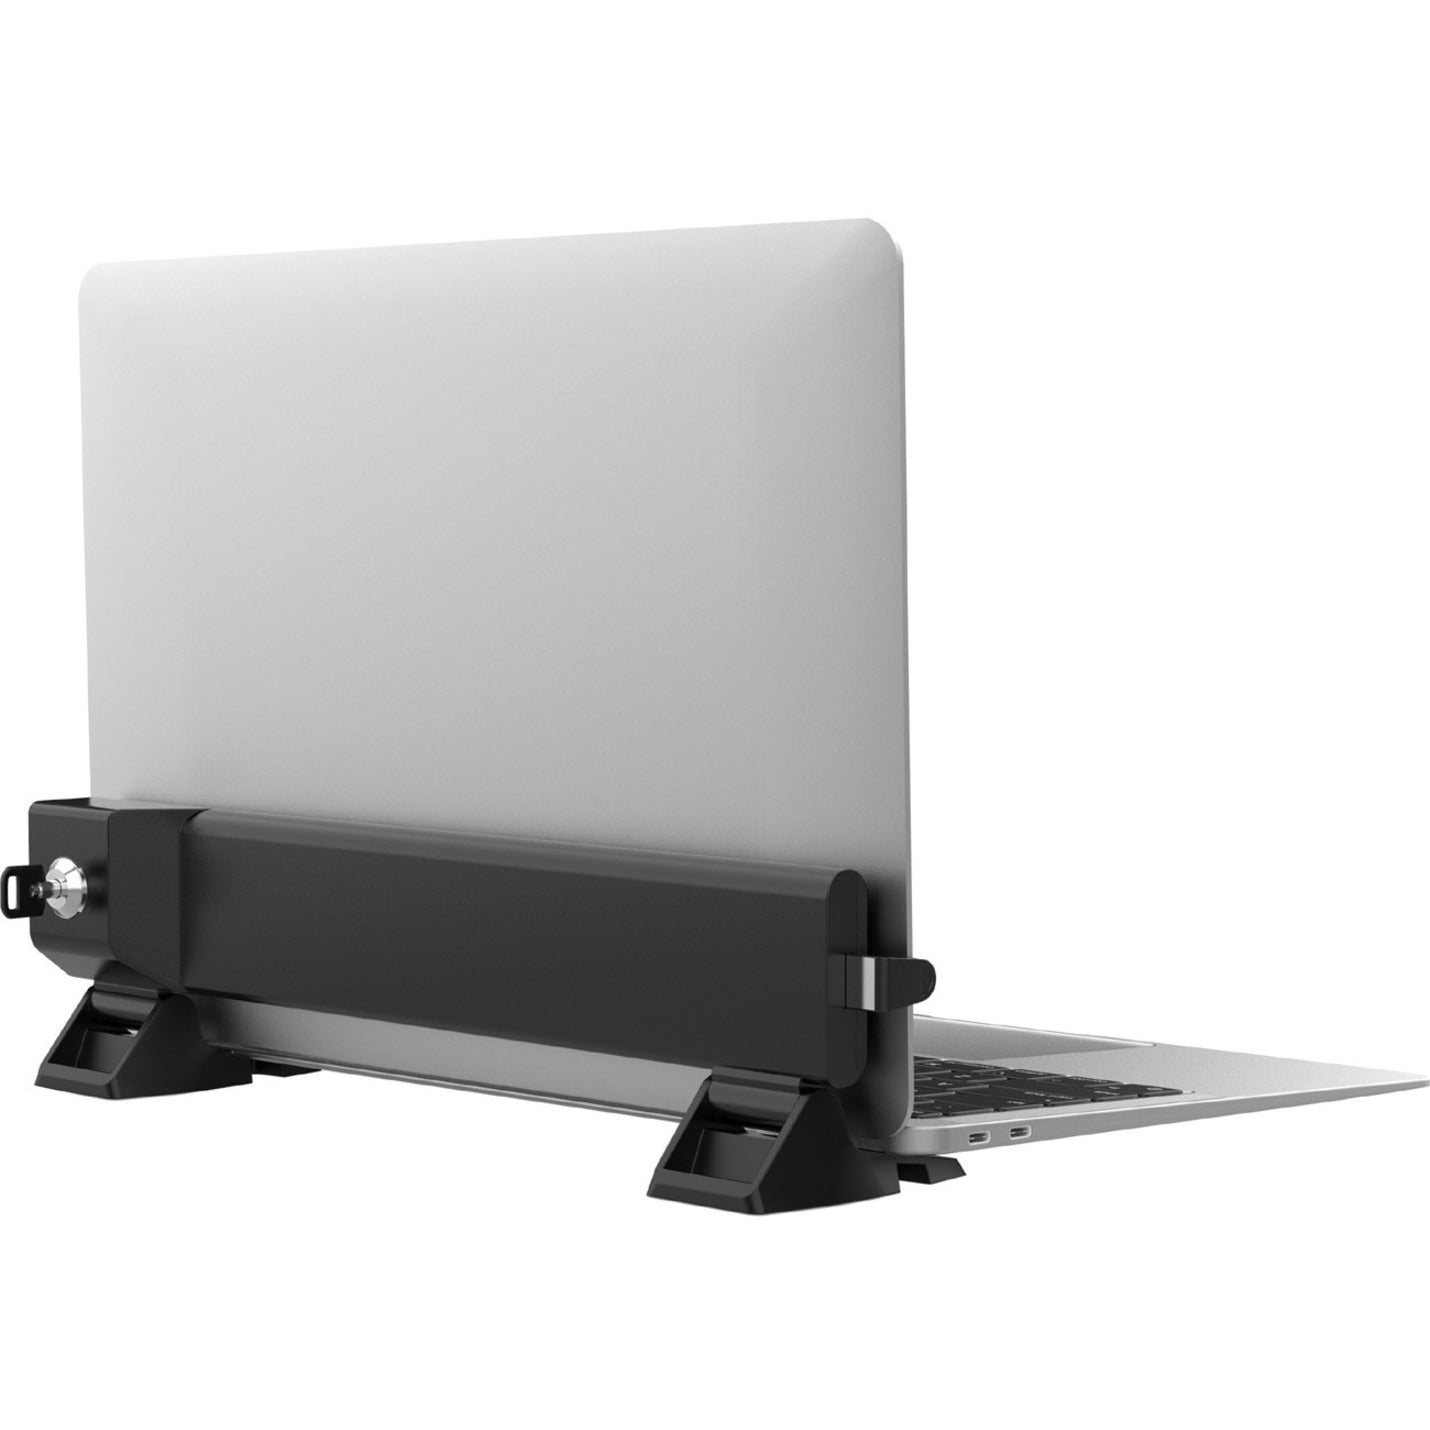 CTA Digital LT-LFSDM Locking and Folding Security Laptop Desk Mount, Adjustable Arm, Key Lock, Lightweight